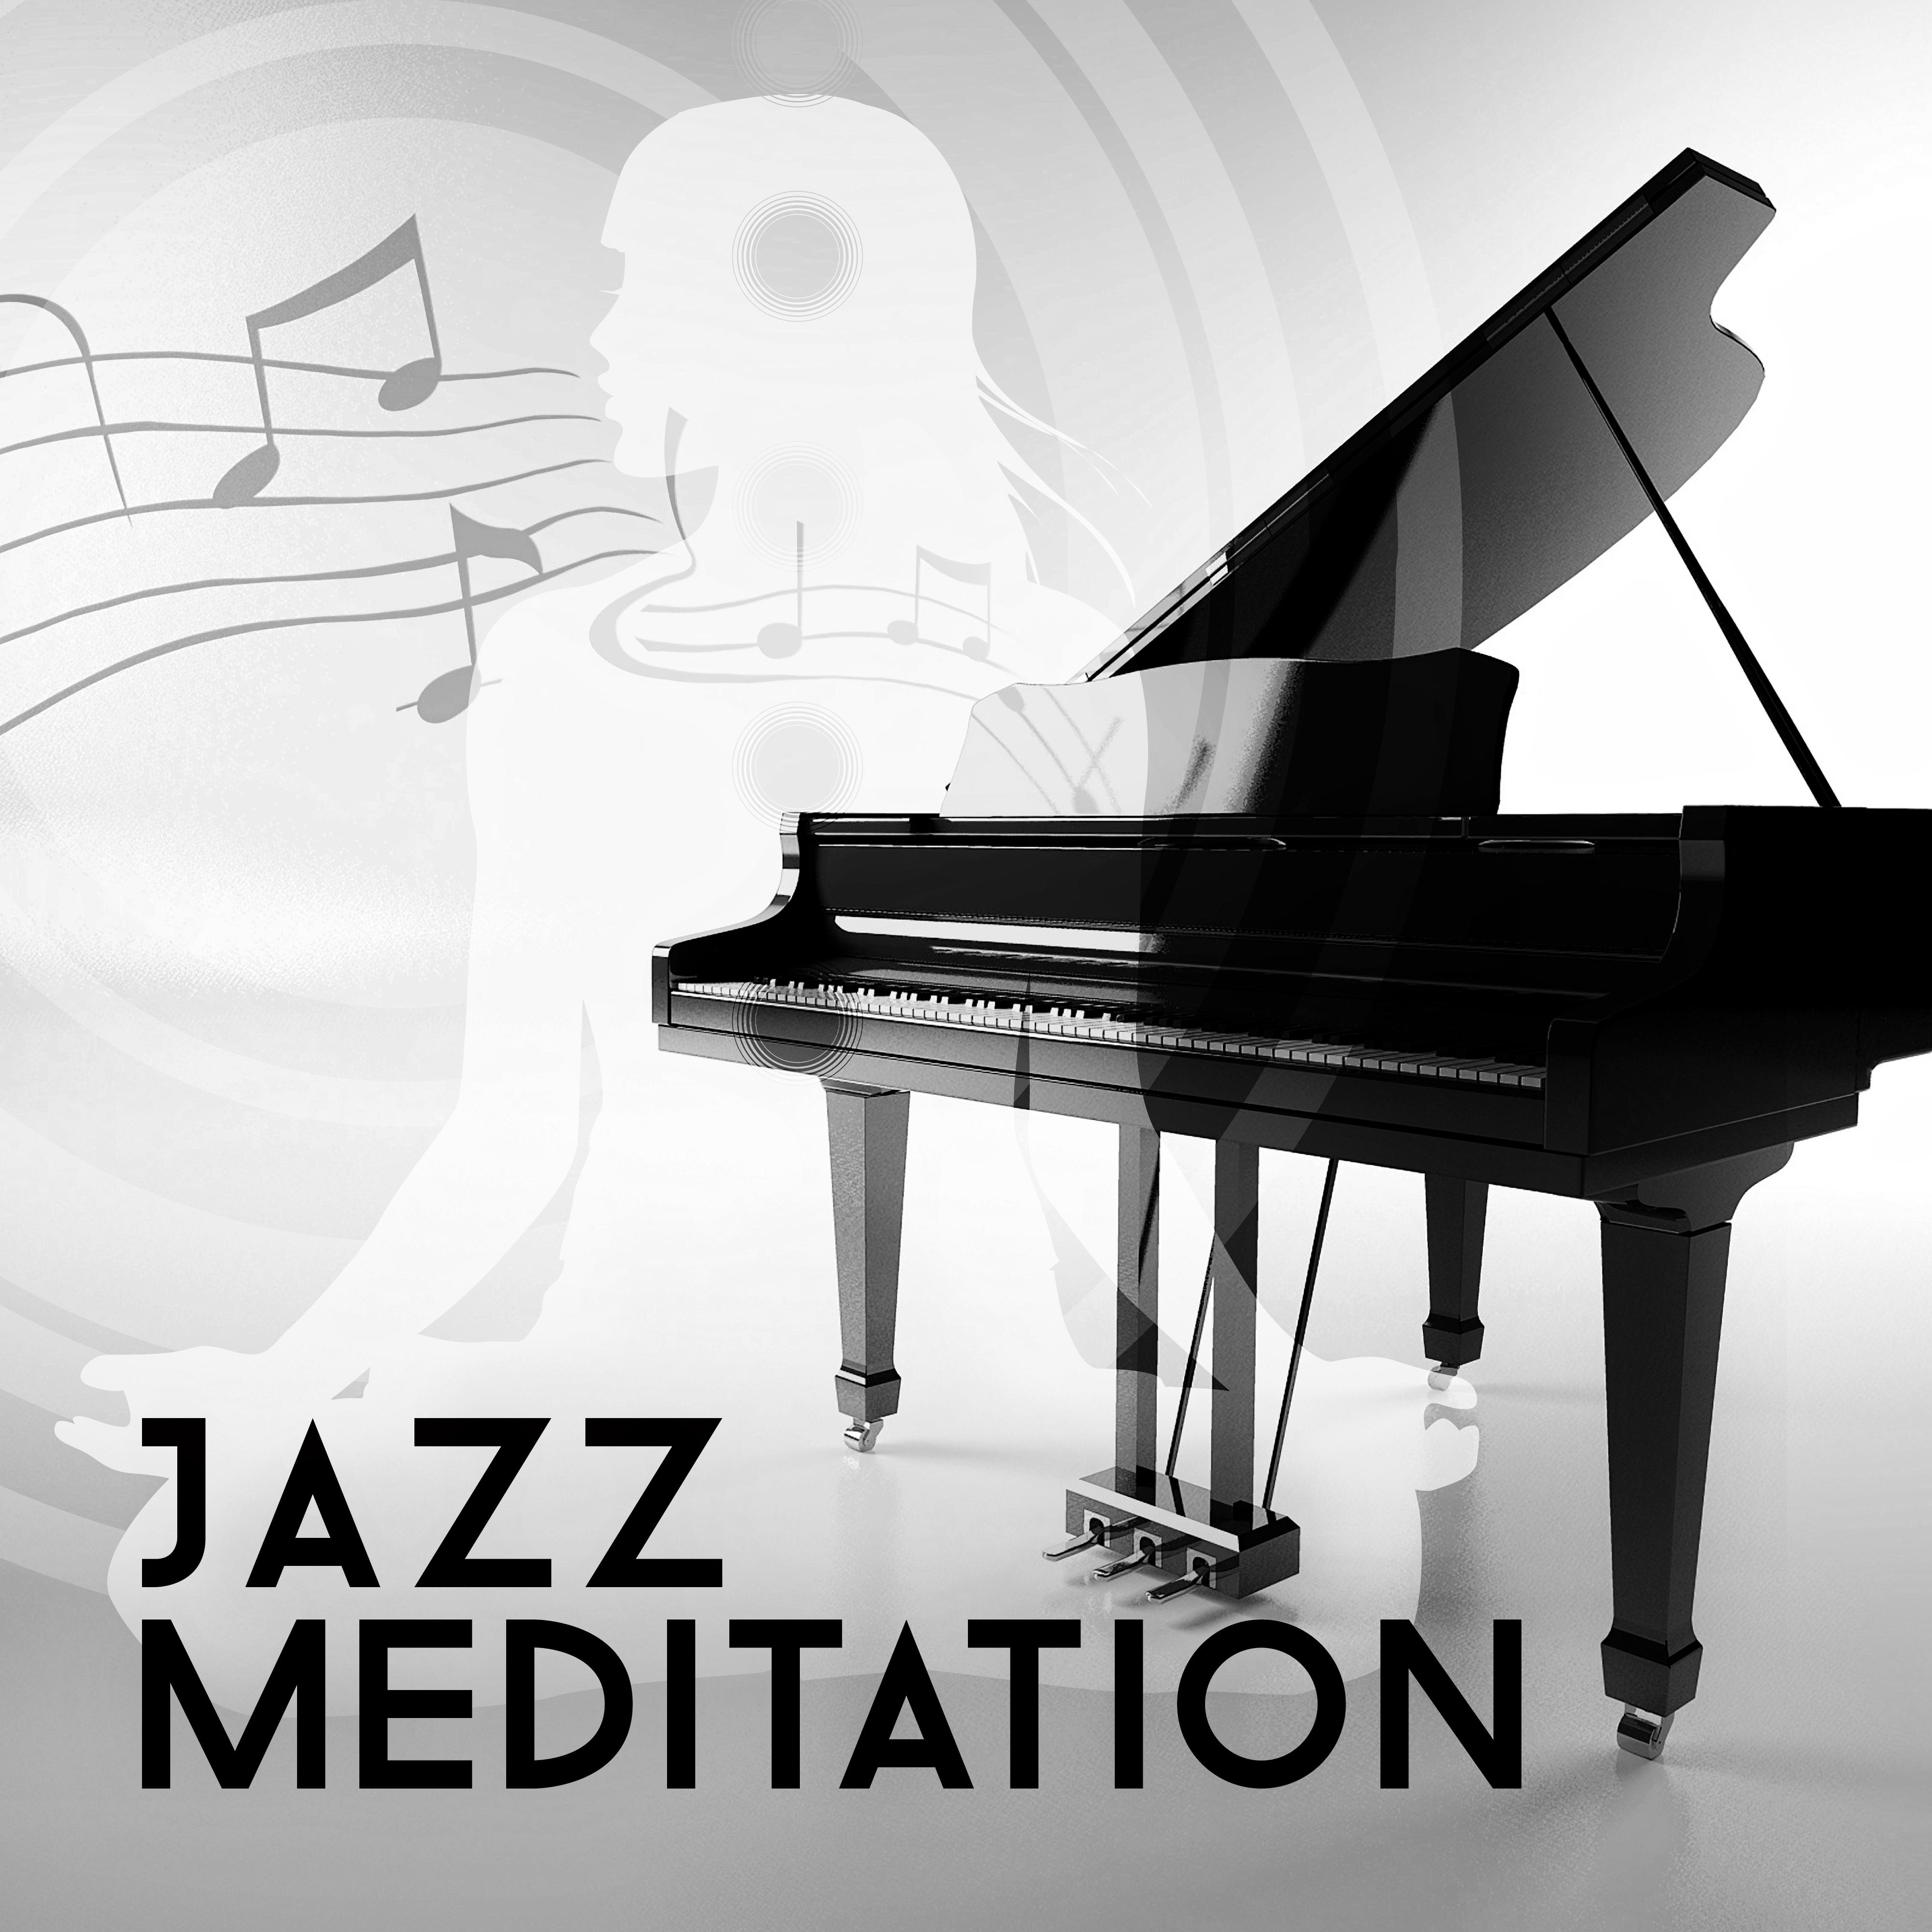 Meditation Jazz